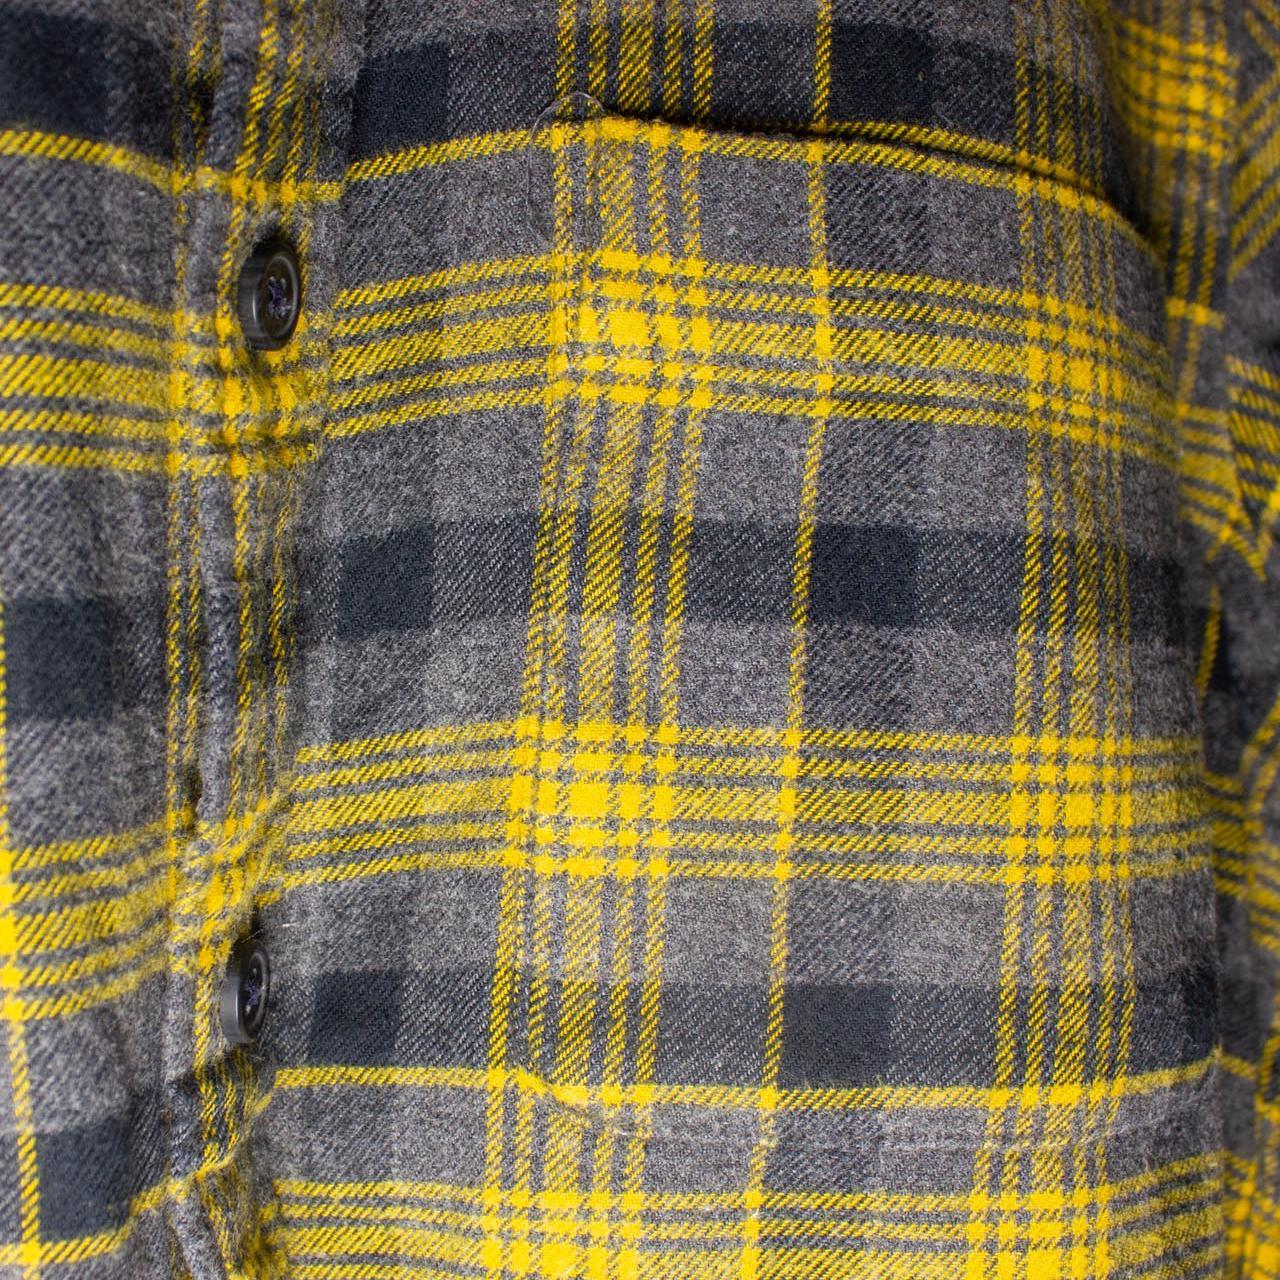 Product Image 2 - Uniqlo plaid shirt.

Beautiful plaid/flannel shirt